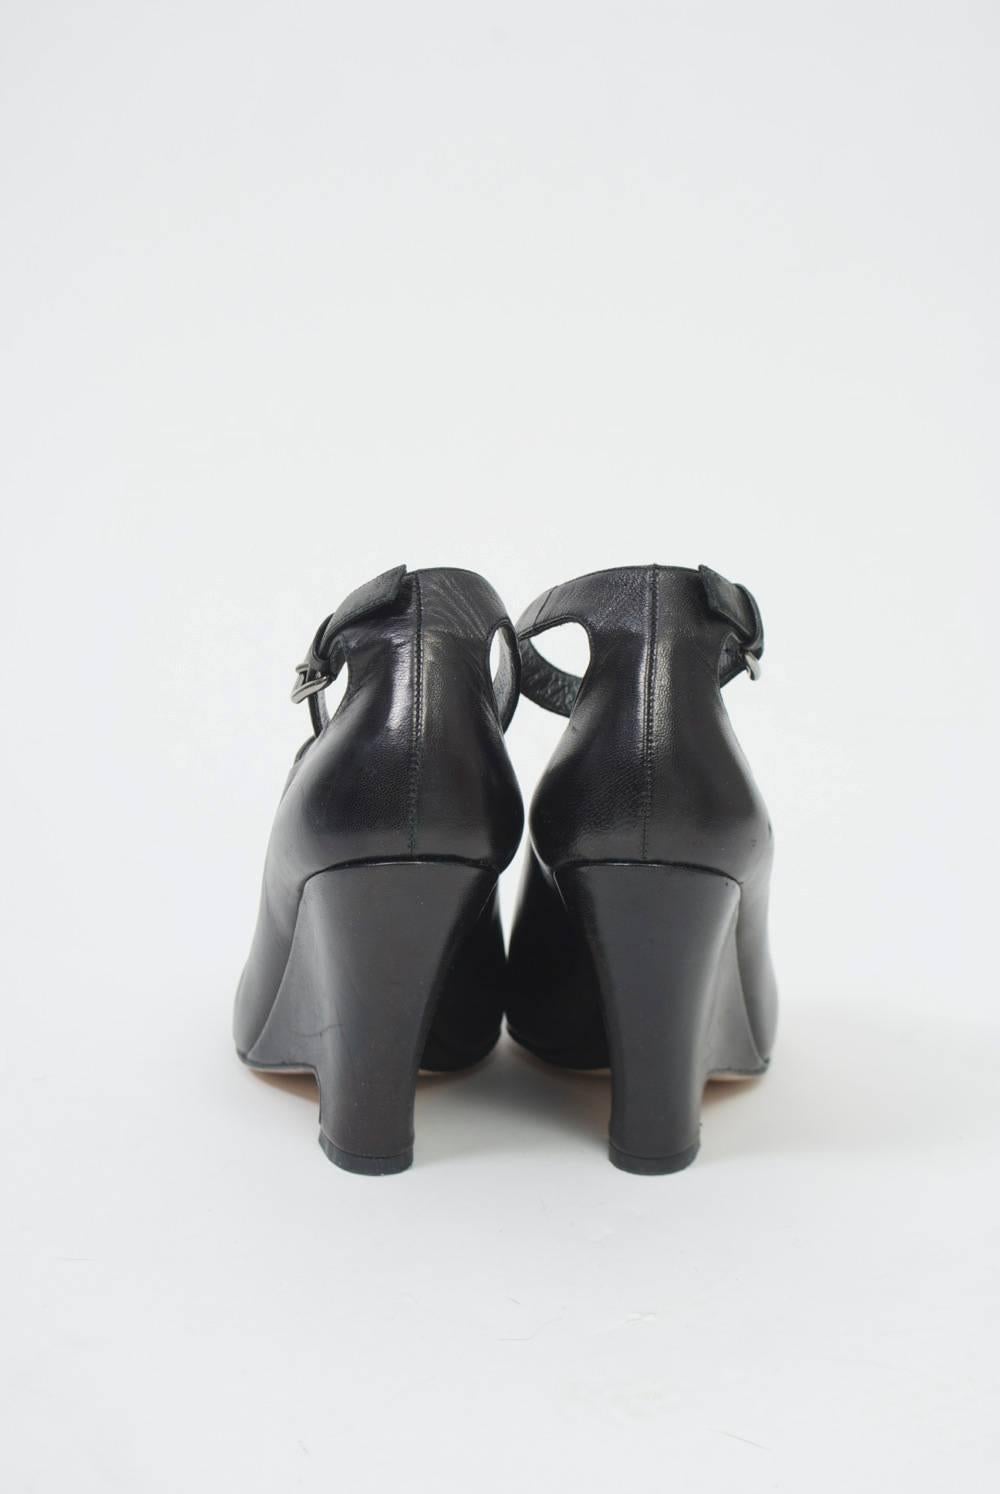 Miu Miu Black Leather Shoes 1